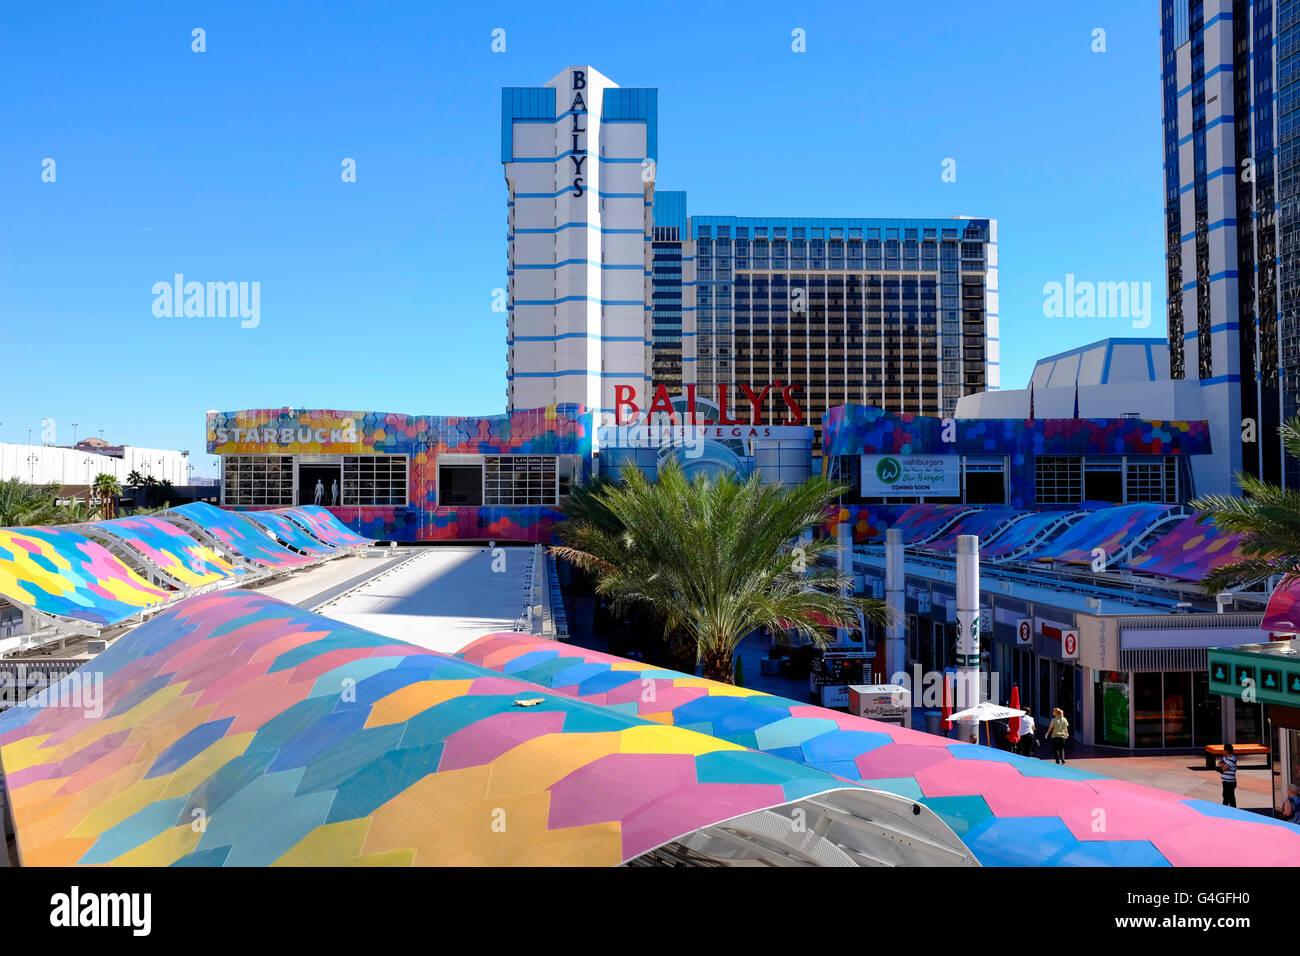 Ballys Hotel, Las Vegas, USA Banque D'Images